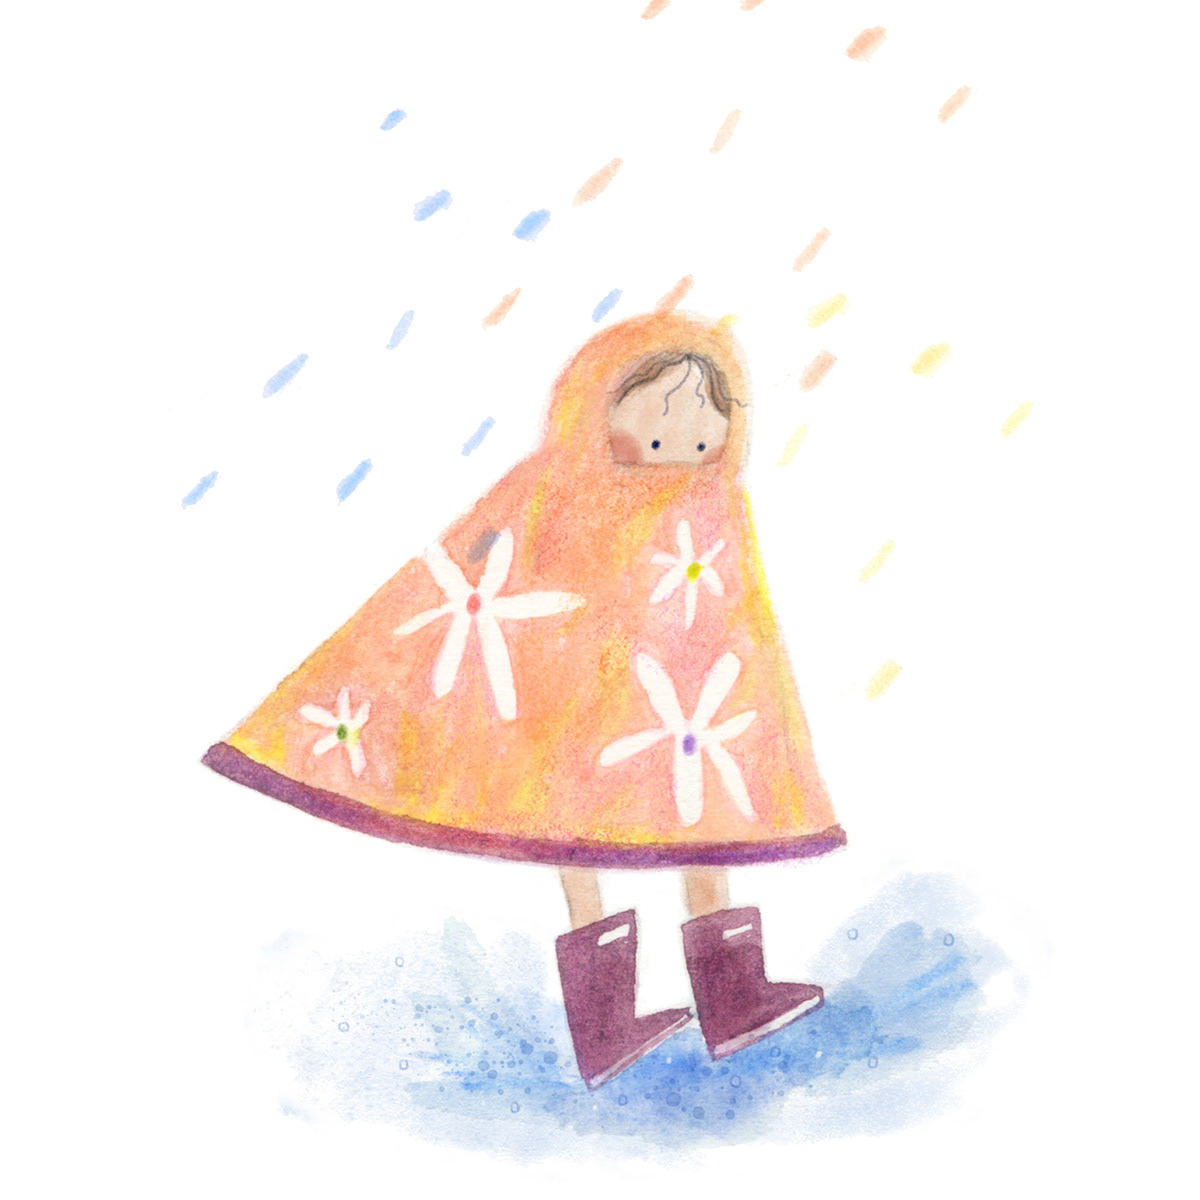 rainy day kid lit